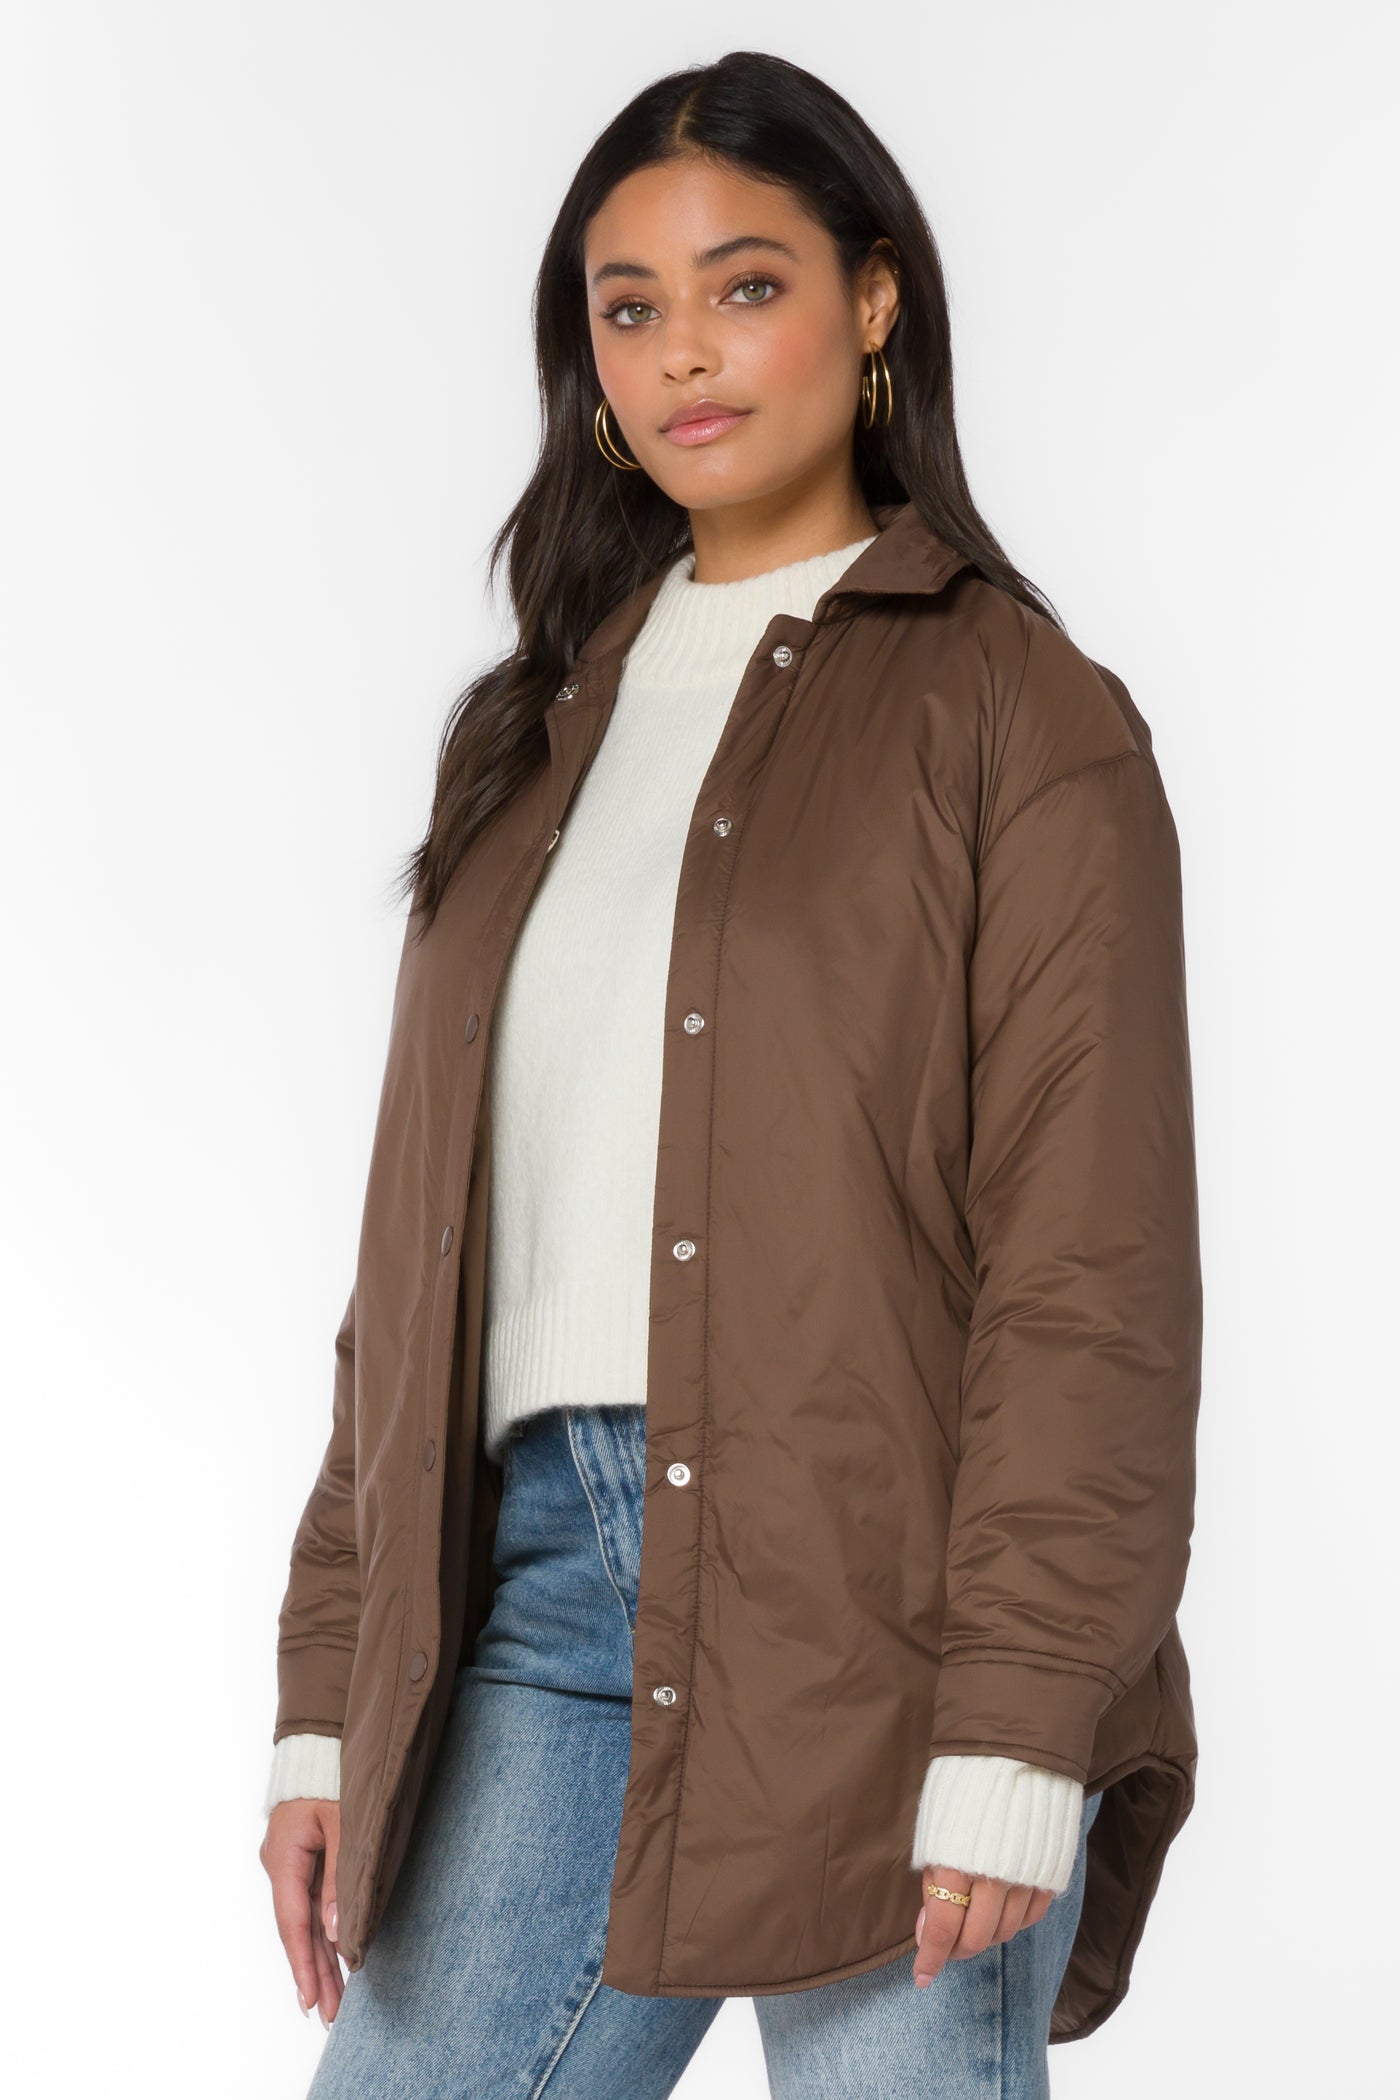 Bernice Brown Jacket - Jackets & Outerwear - Velvet Heart Clothing